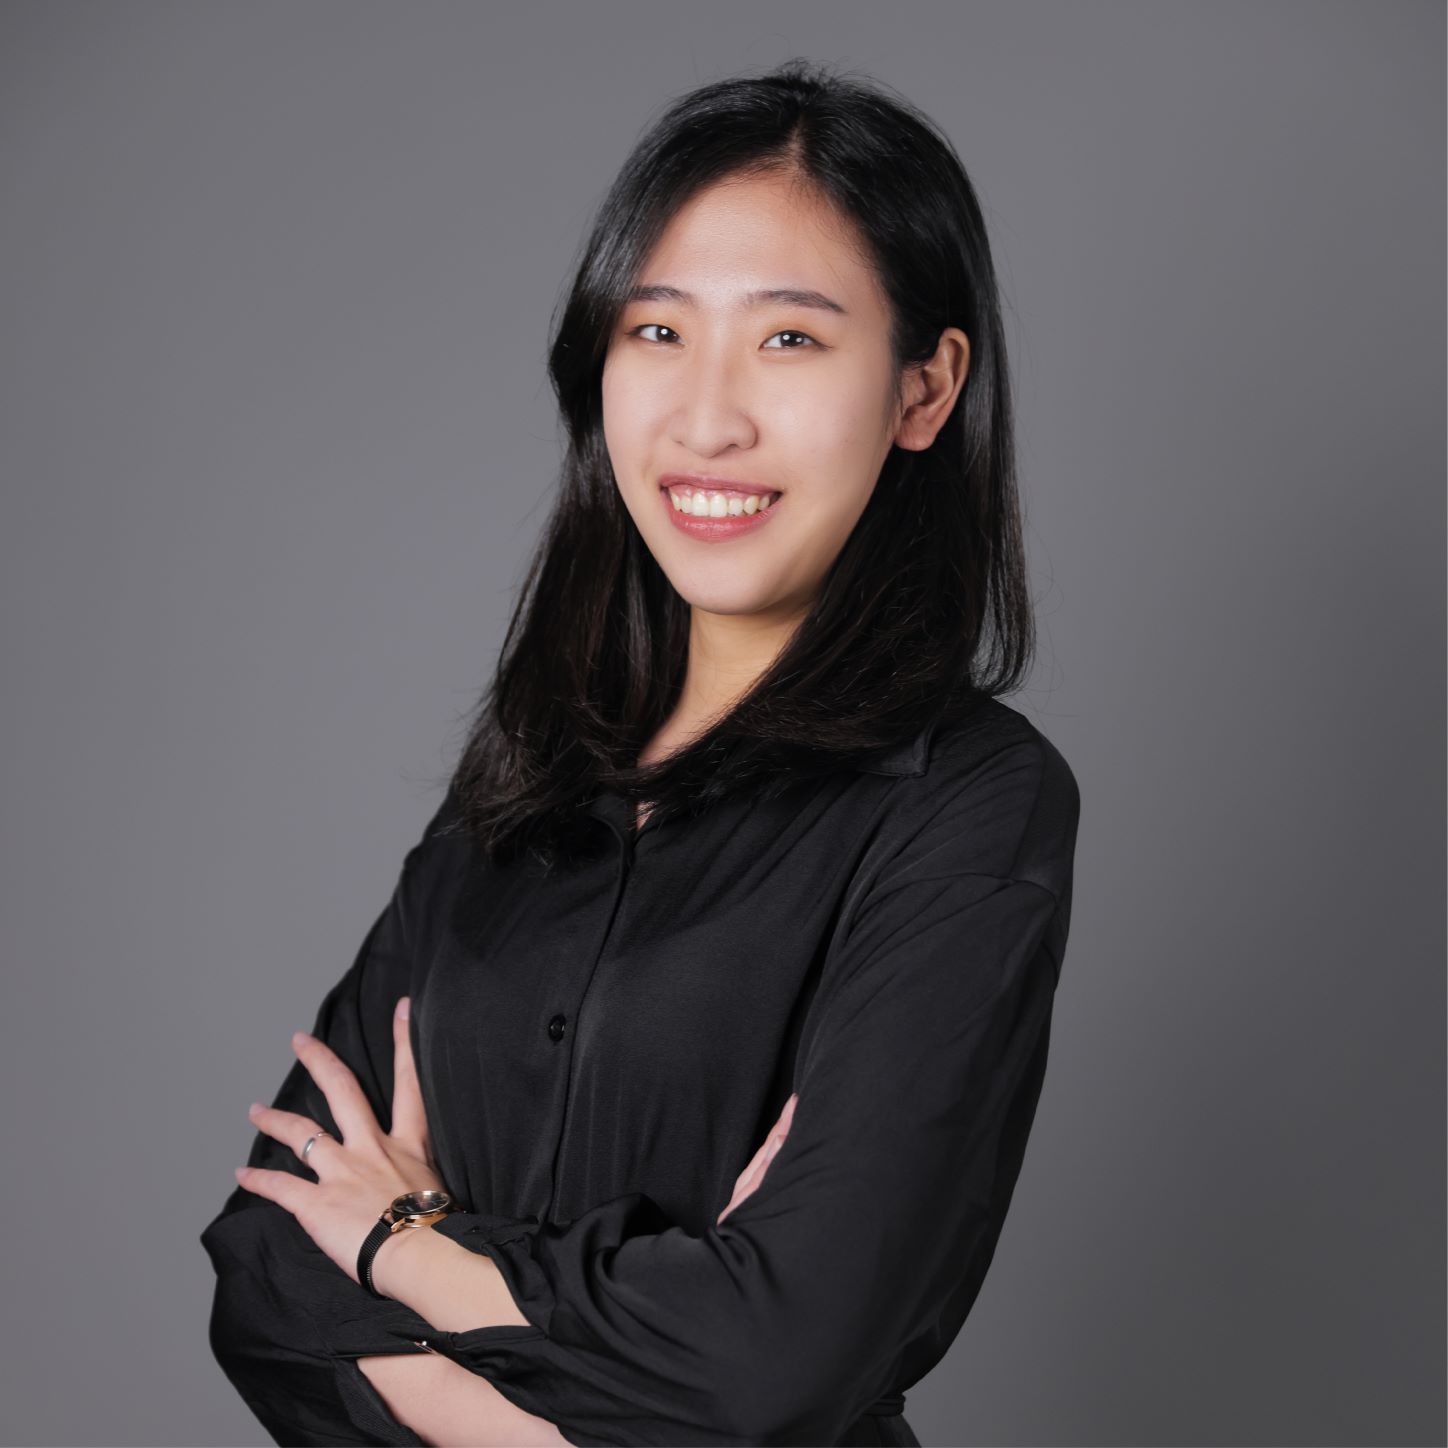 Erica Chang